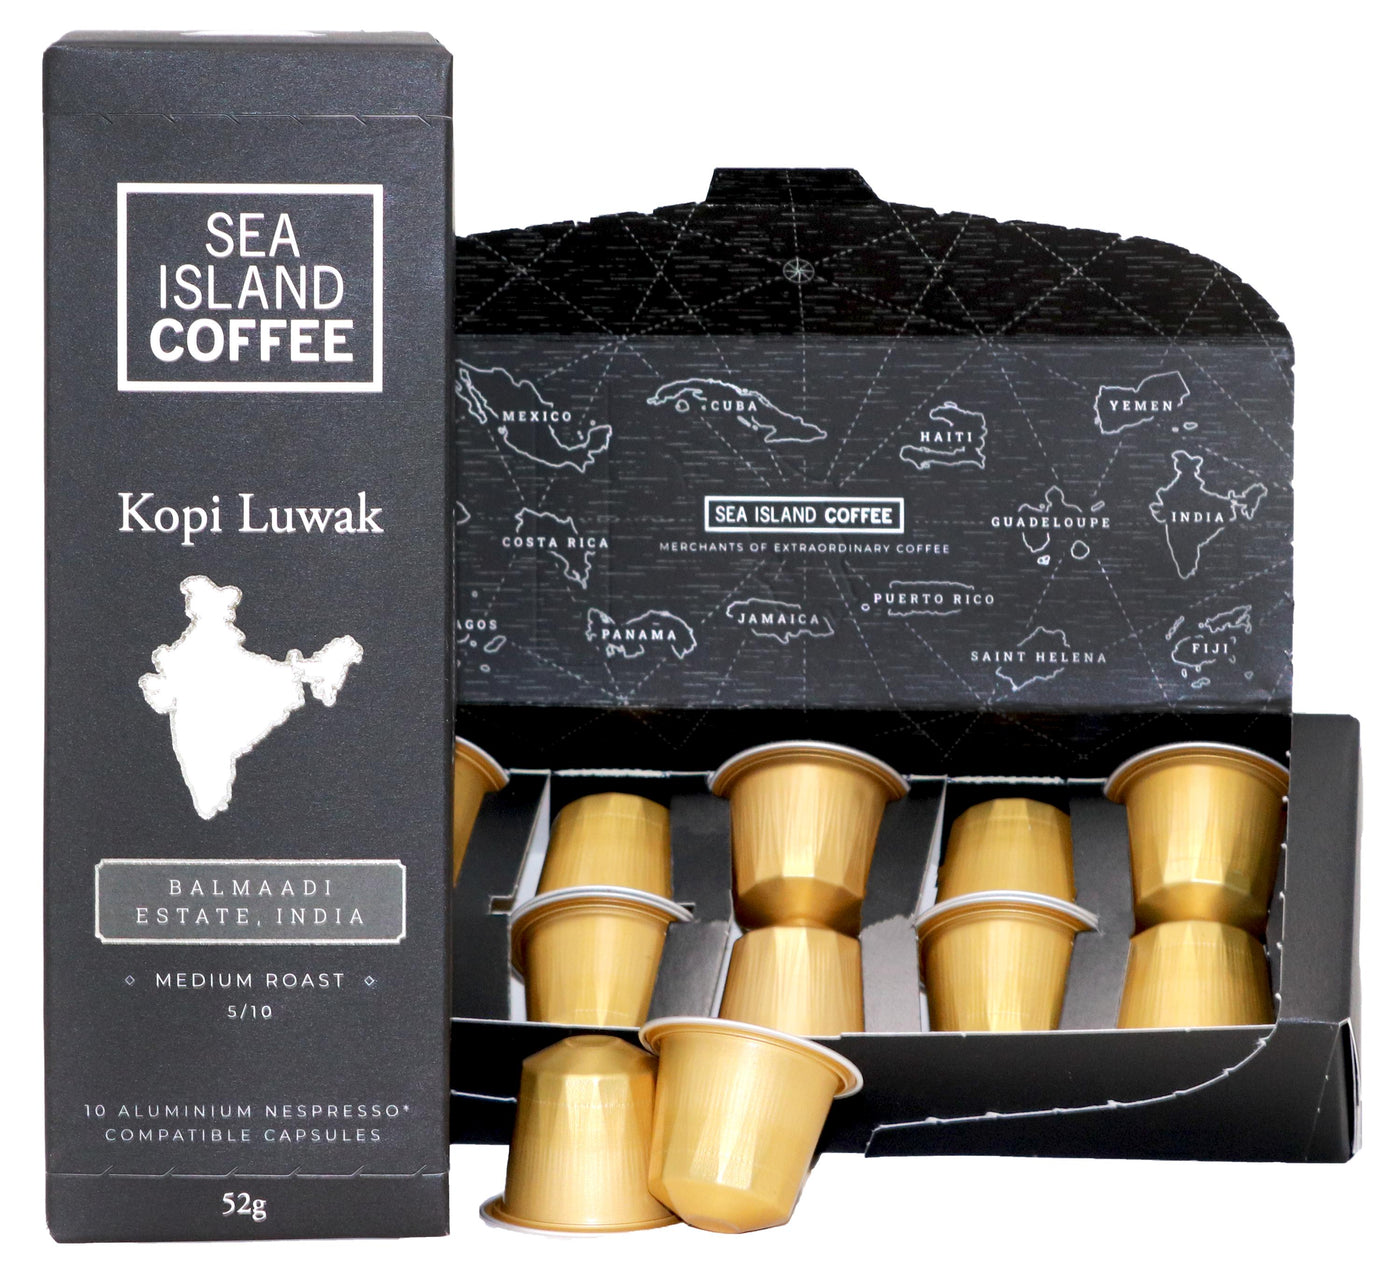 Product shot of some Wild Kopi Luwak Nespresso compatible coffee pods